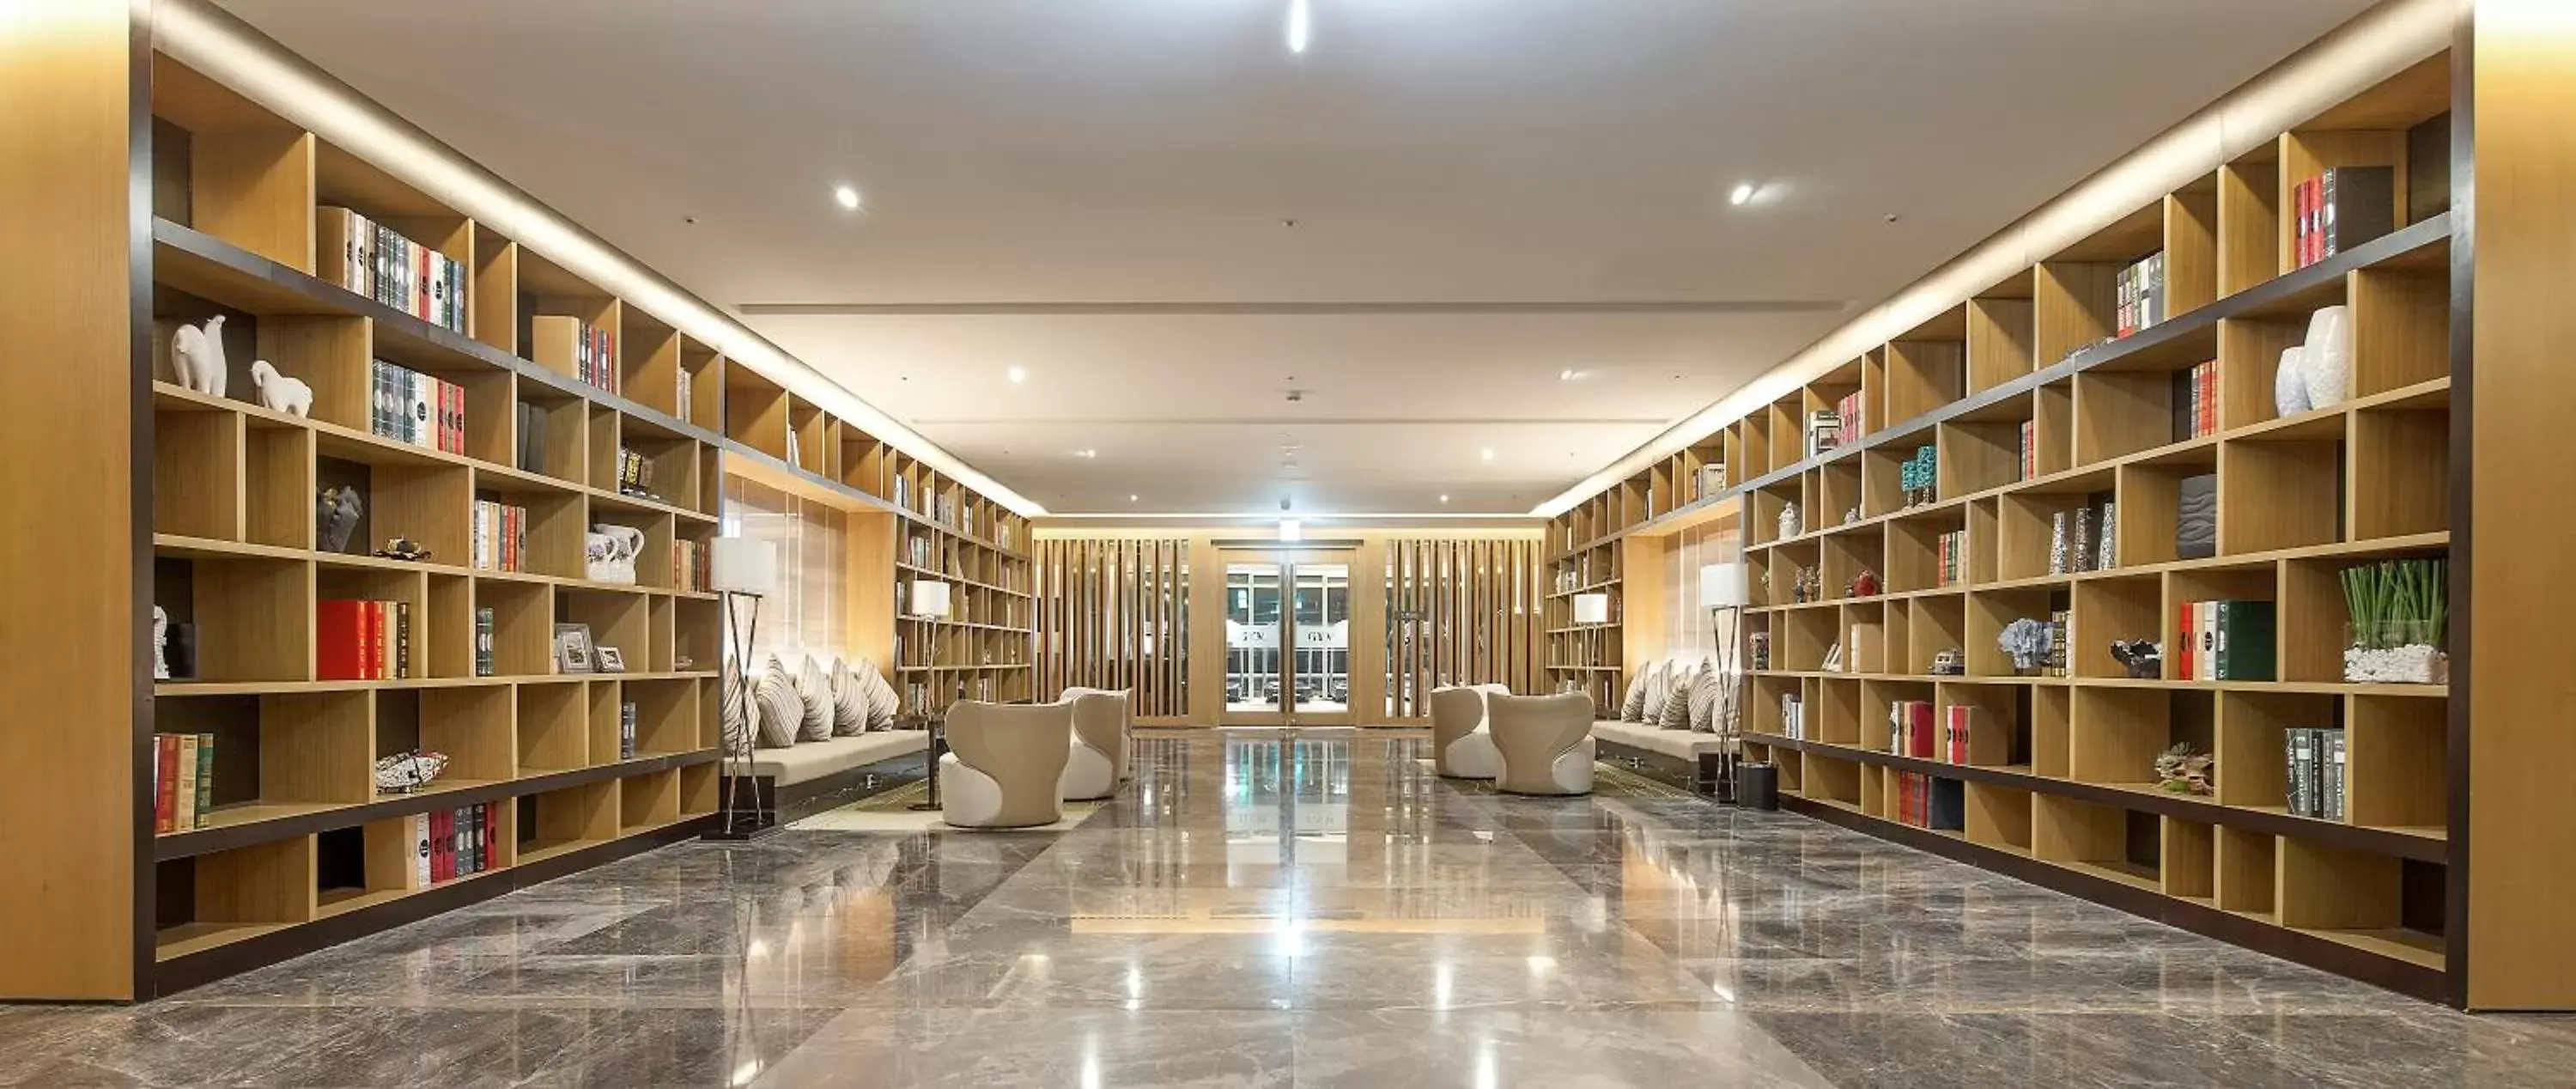 Fitness centre/facilities, Library in Lotte Hotel Hanoi